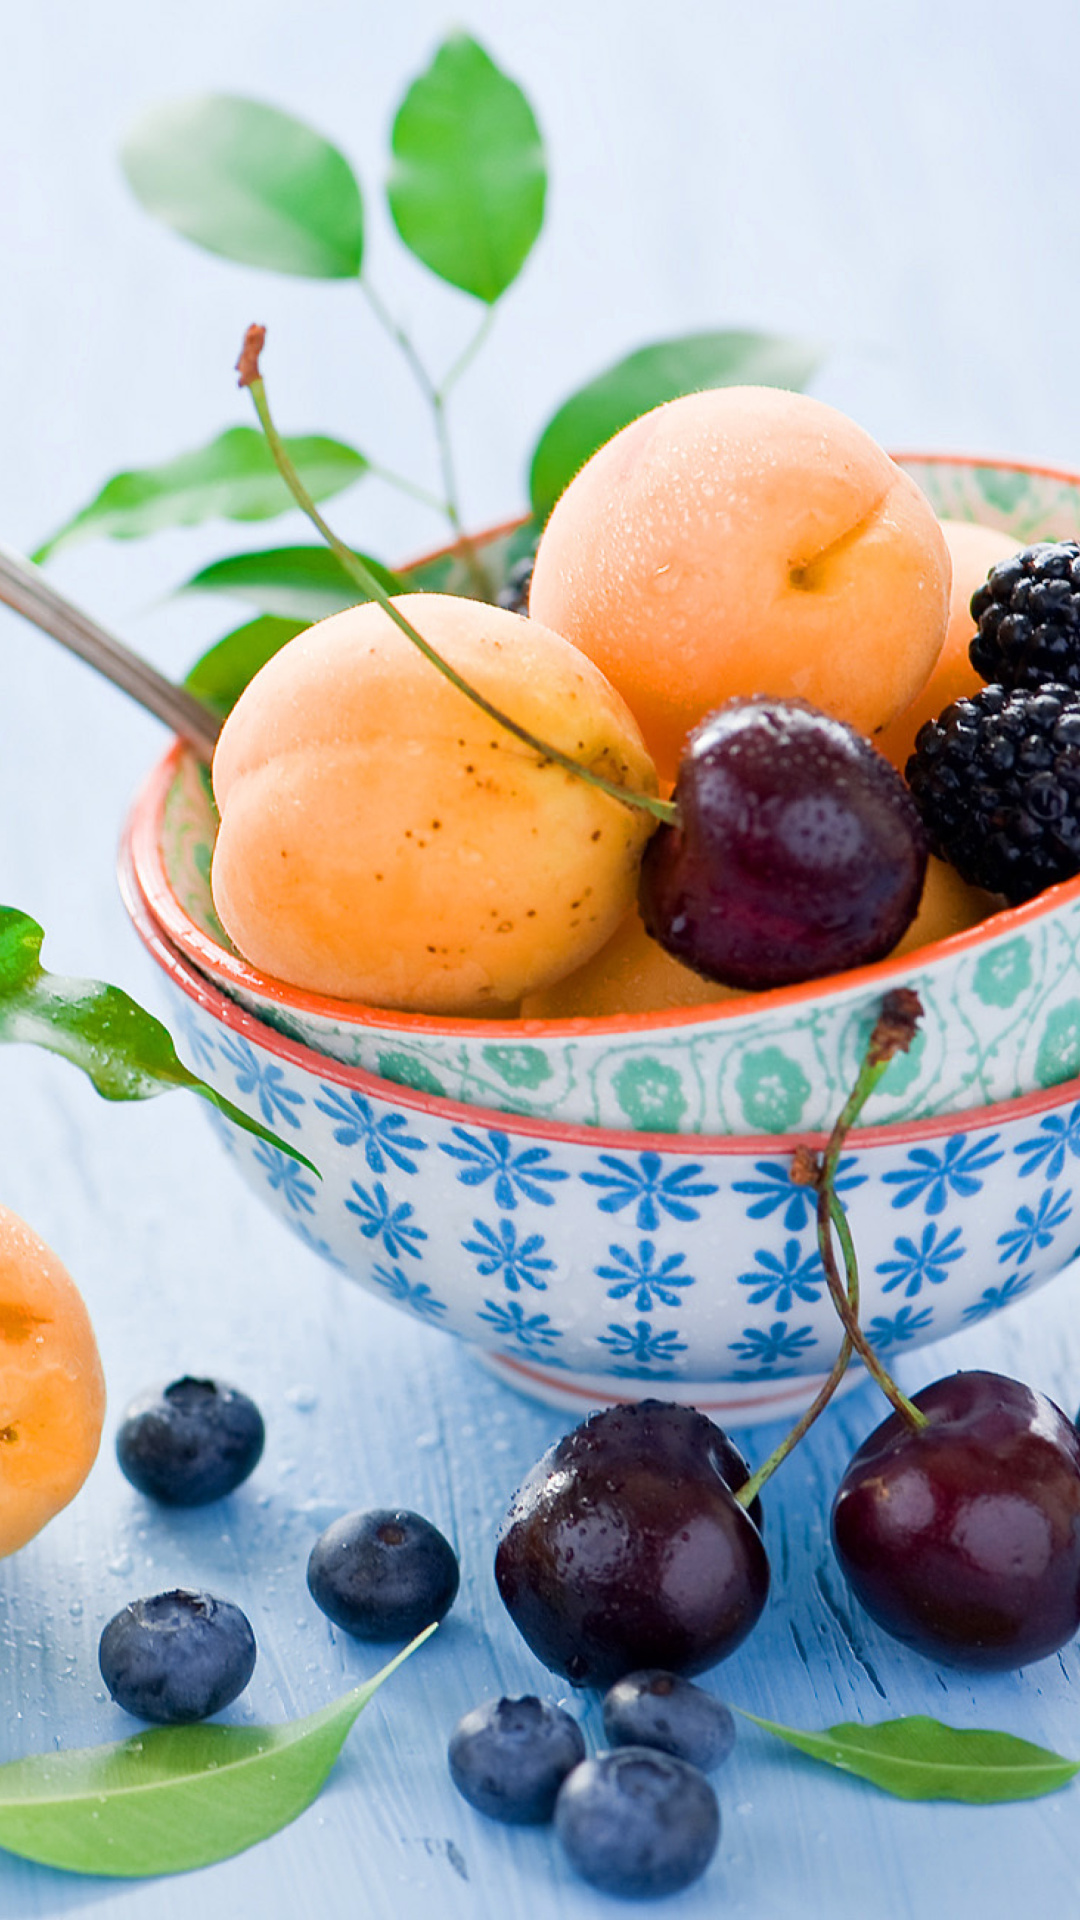 Apricots, cherries and blackberries wallpaper 1080x1920